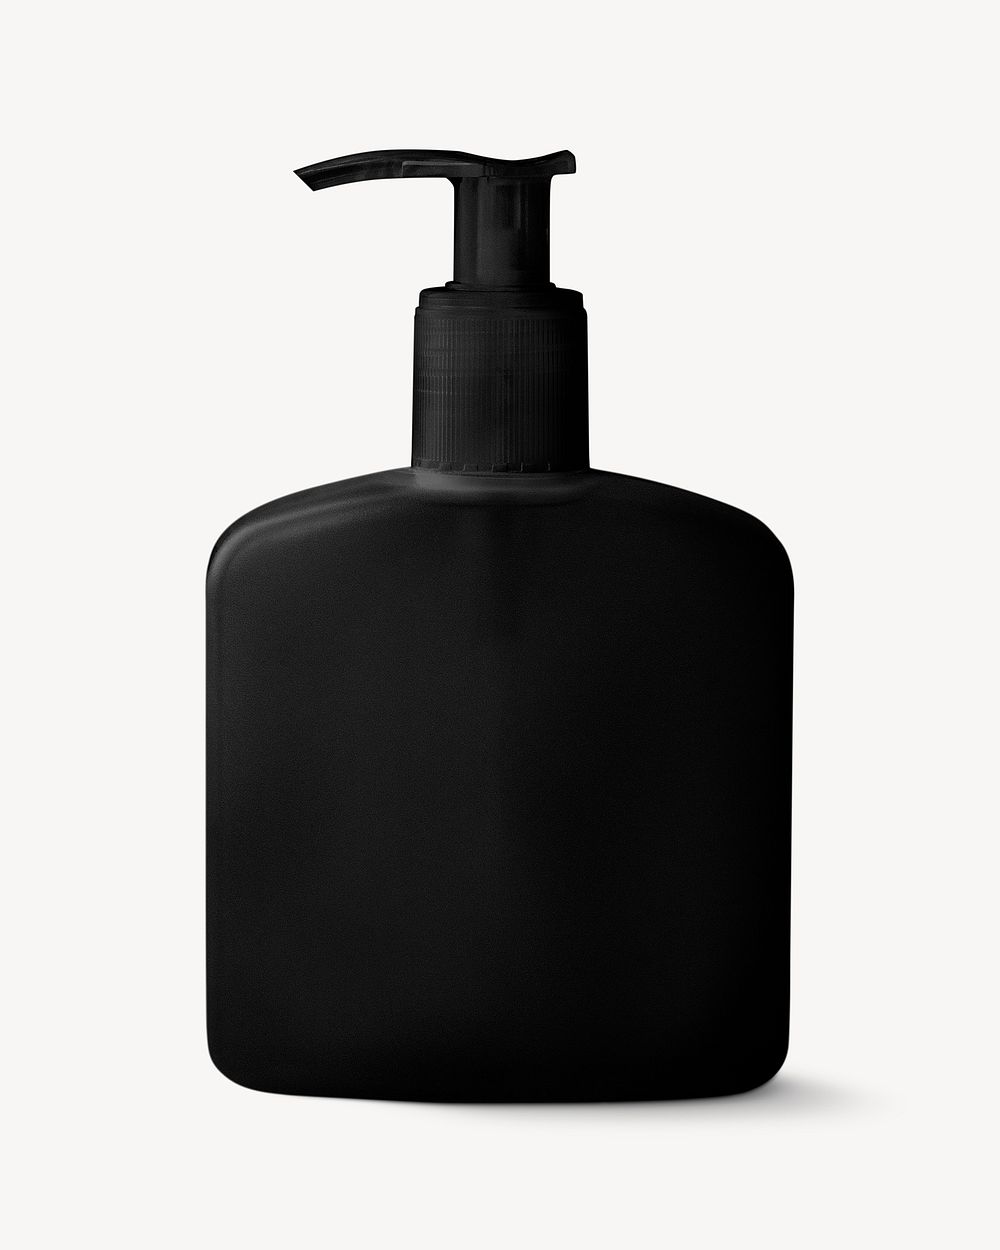 Black pump bottle isolated design